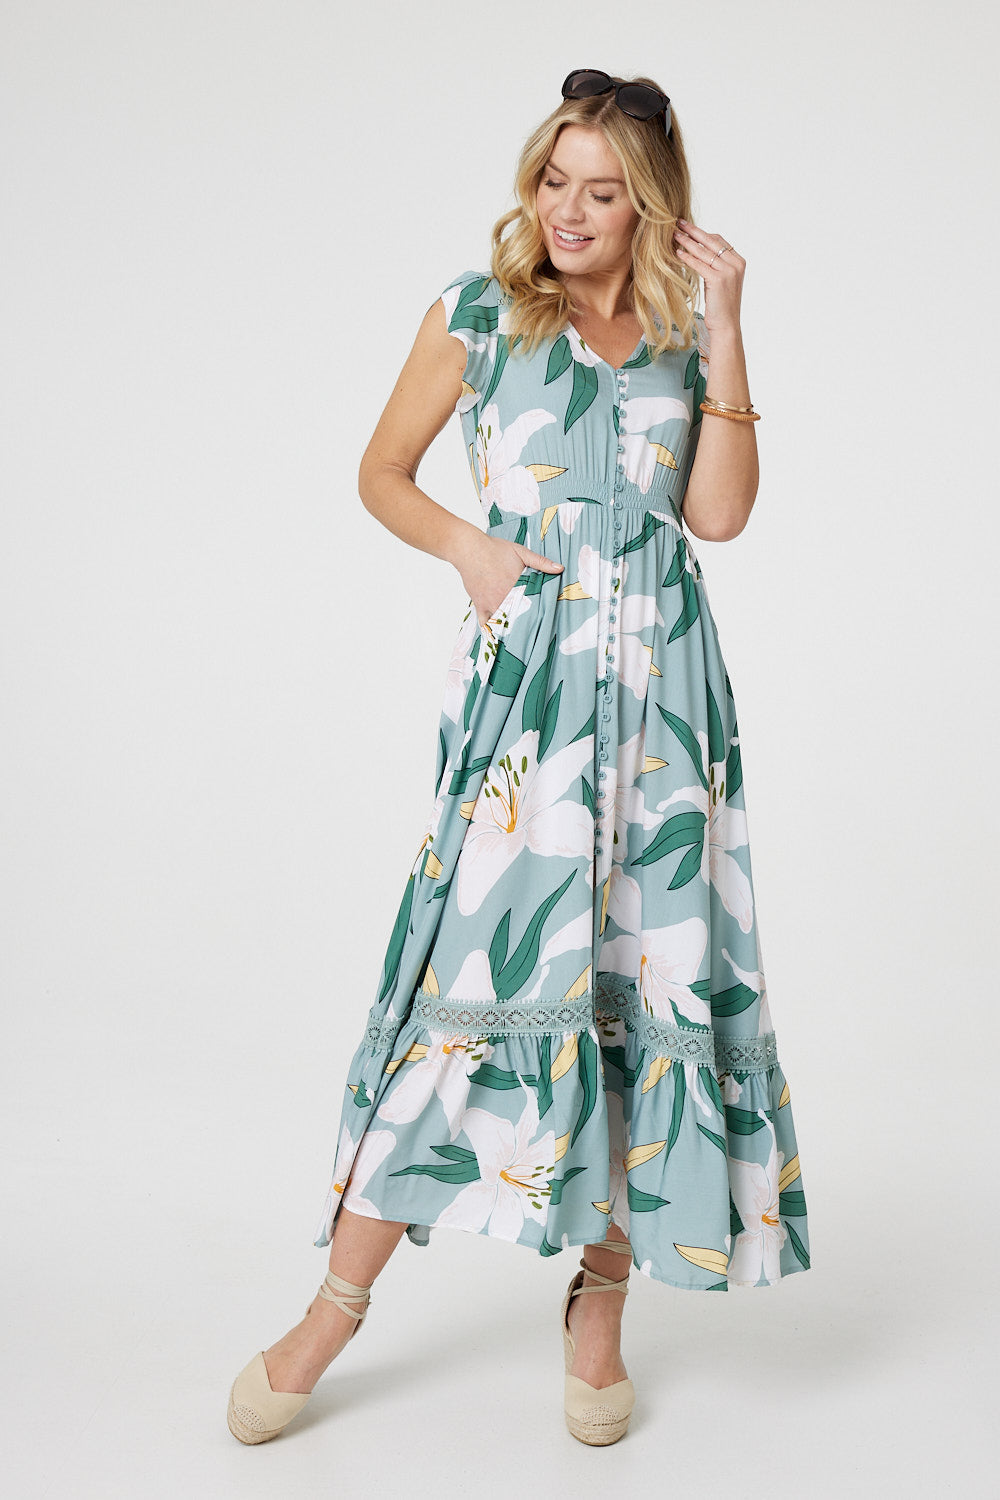 Green | Lilly Print Lace Trim Maxi Dress